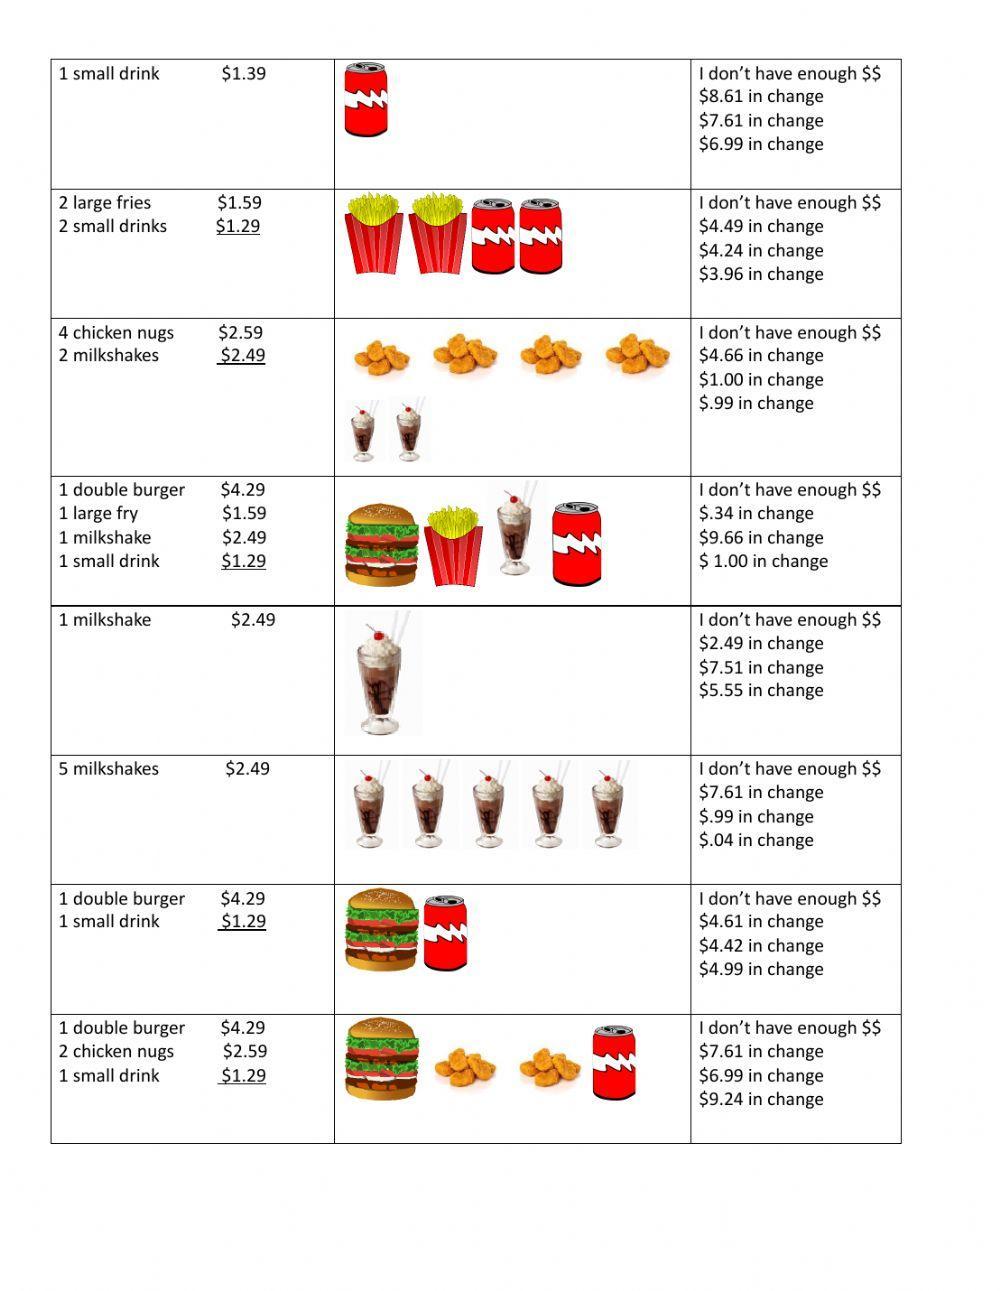 Fast Food Math 2